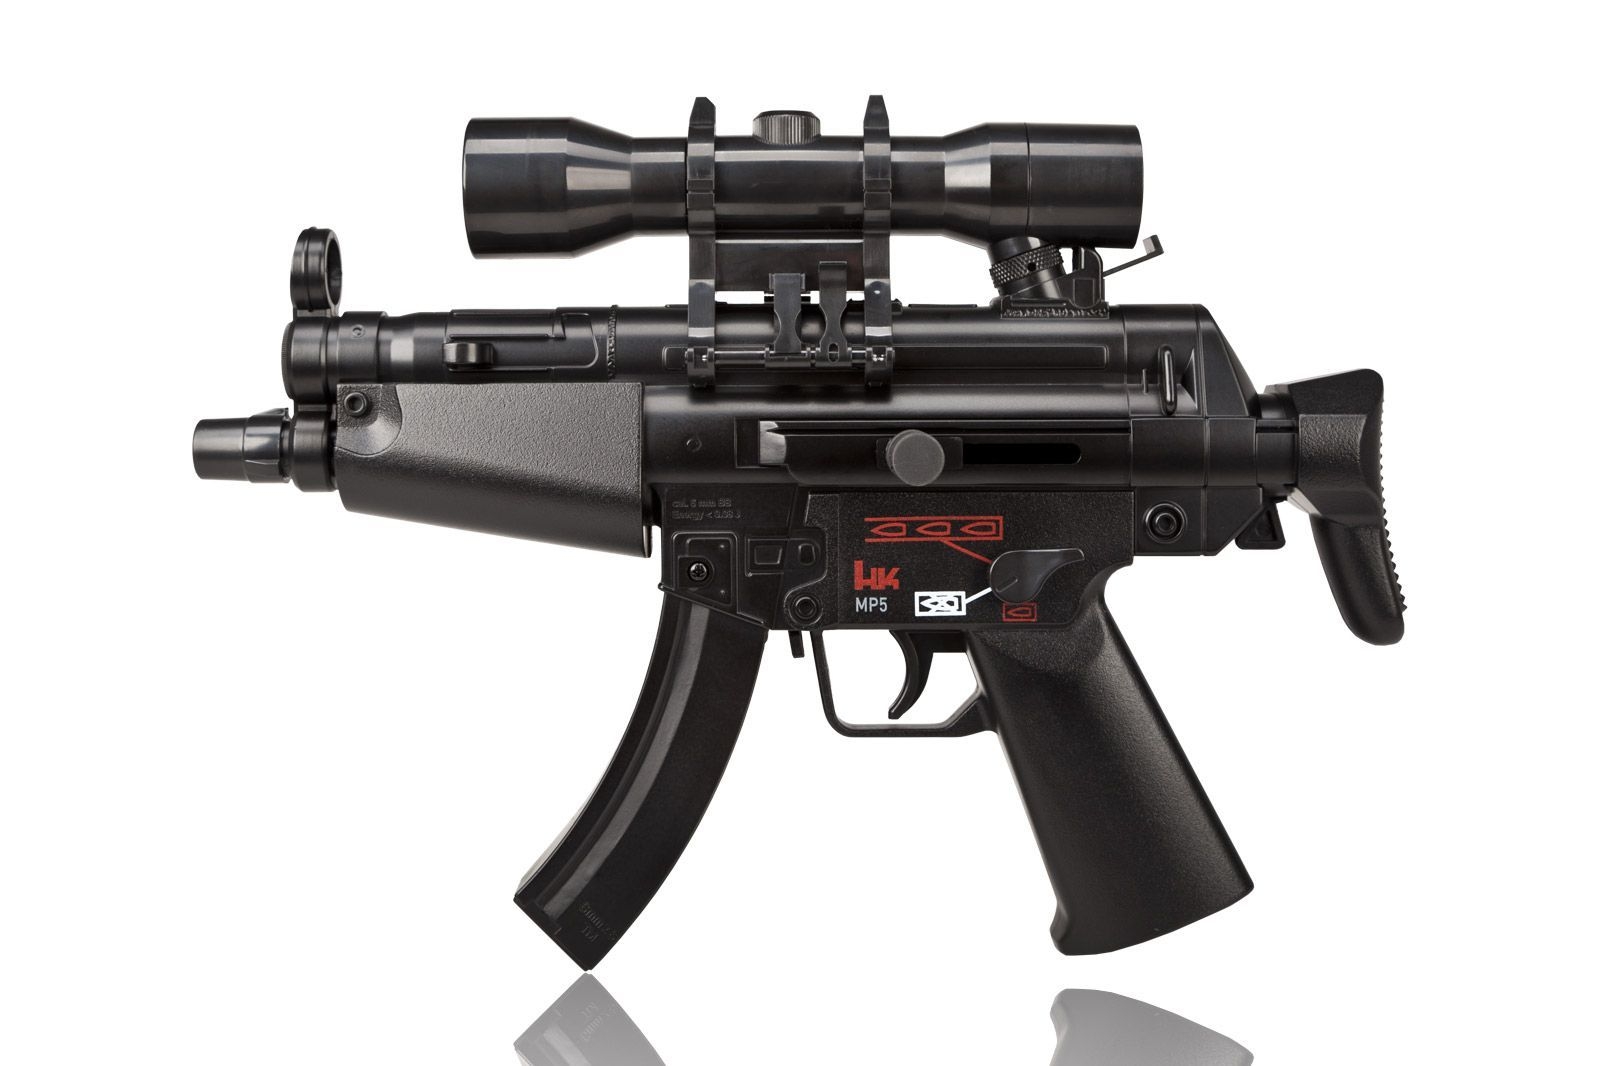 Pistolet maszynowy ASG Heckler & Koch MP5 SET elektryczny (2.5921)